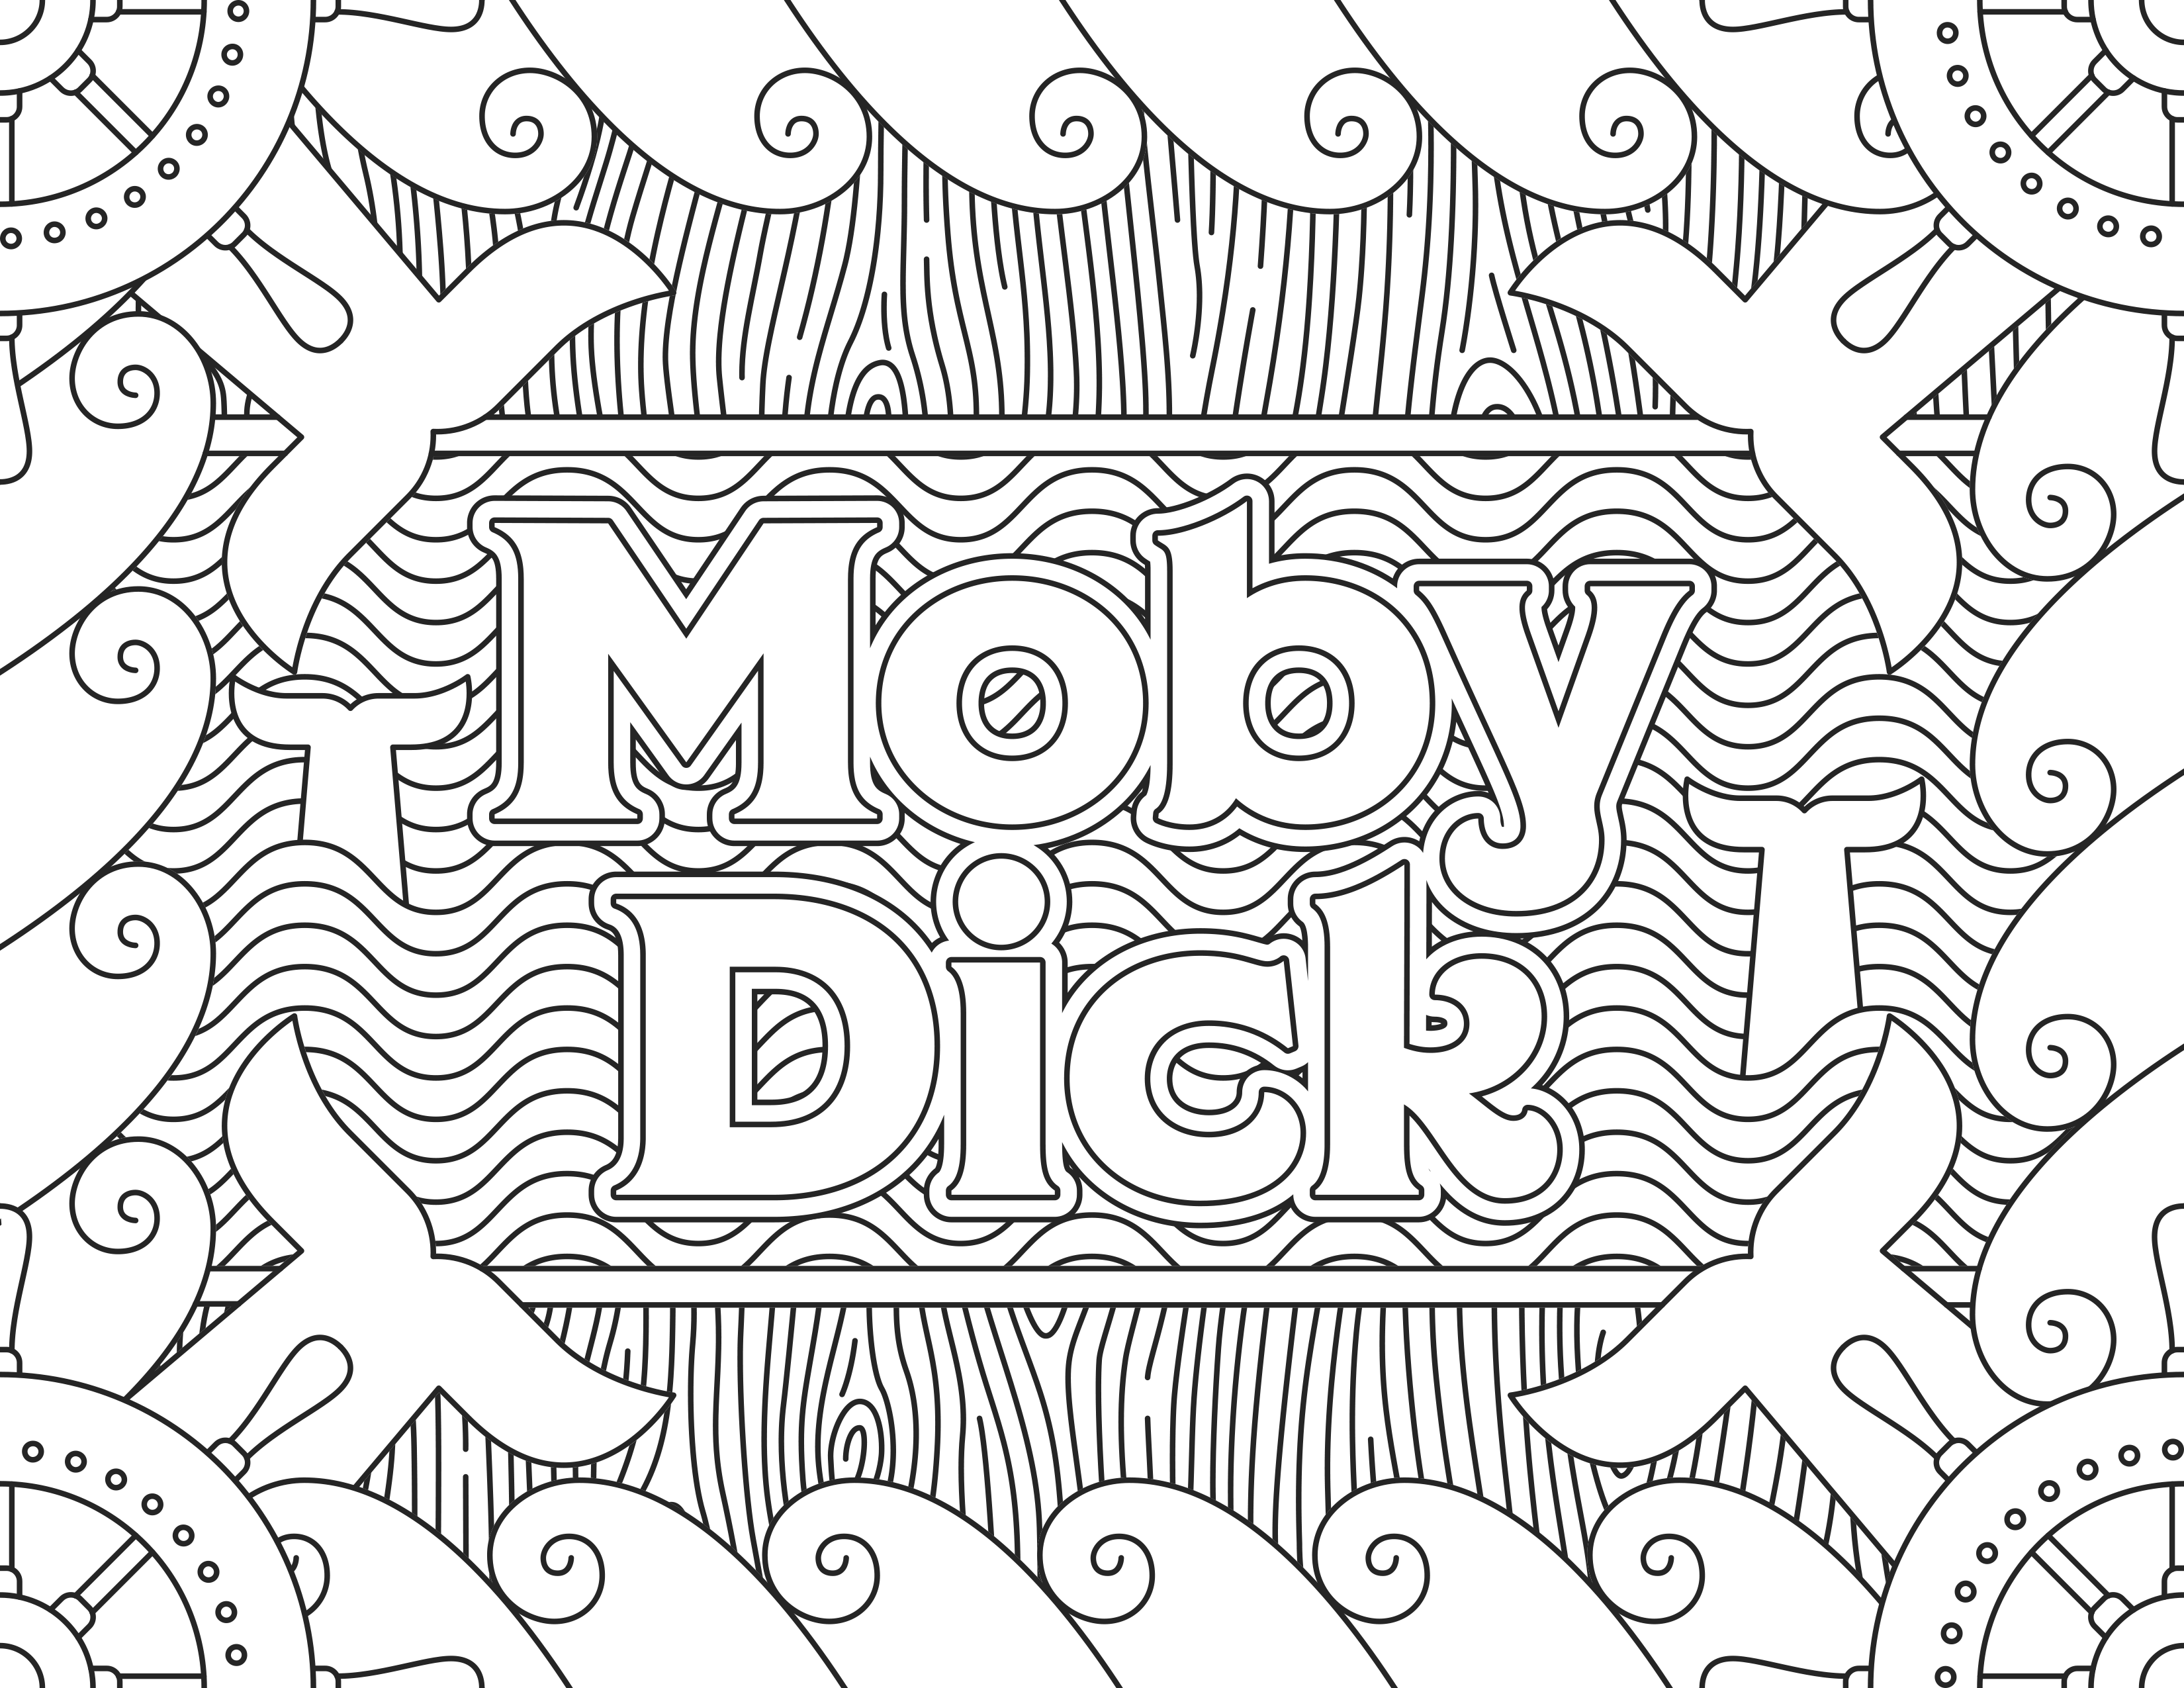 Colorir inspirado no filme 'Moby Dick